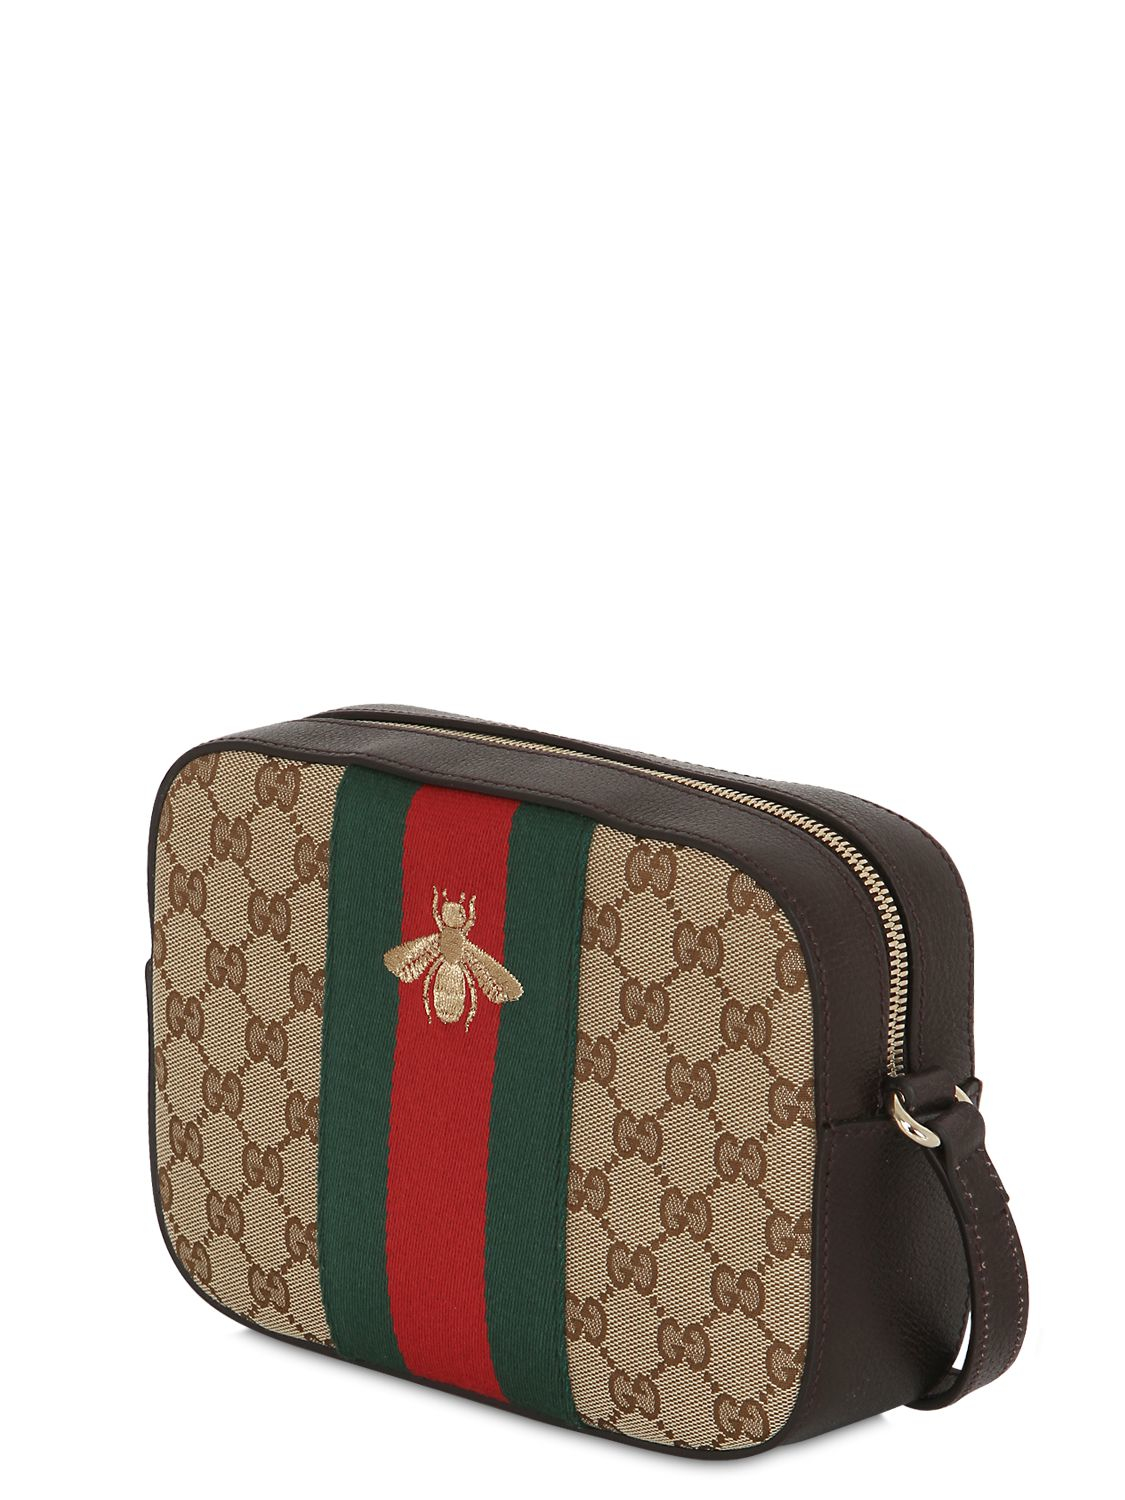 Gucci Bag With Bee Logo | CINEMAS 93